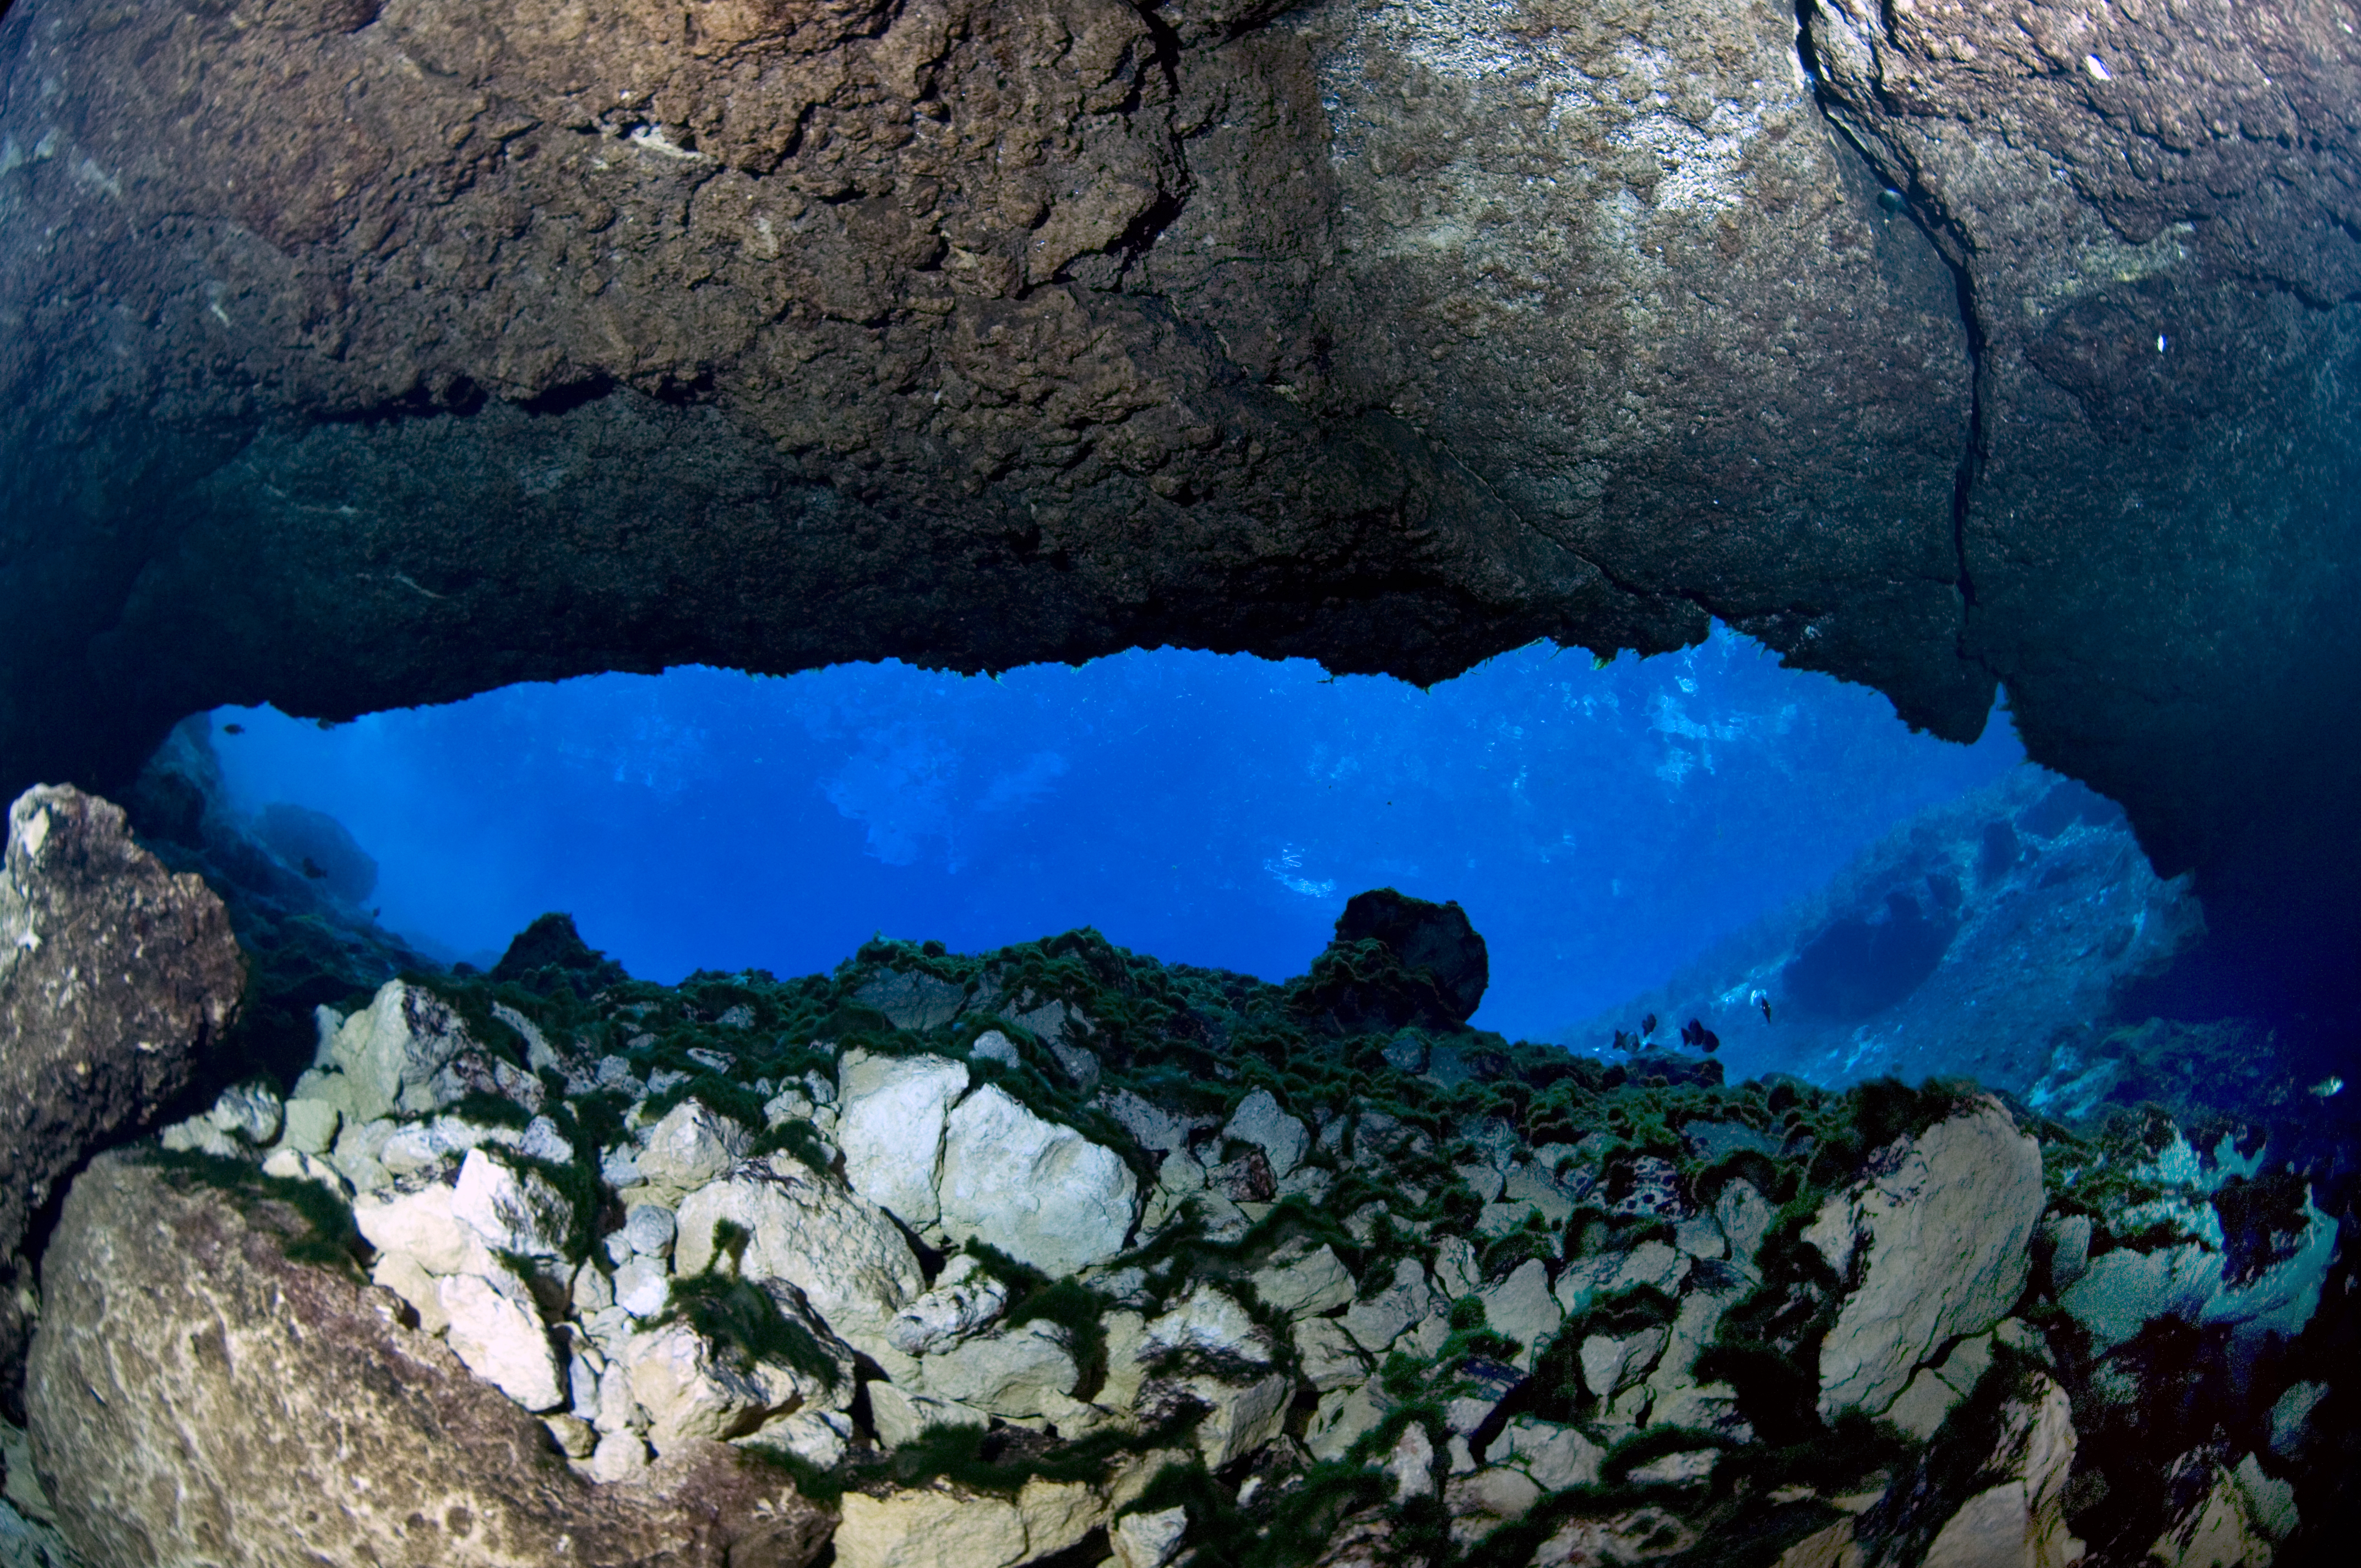 Ocala Limestone exposed in Mammoth Spring cavern